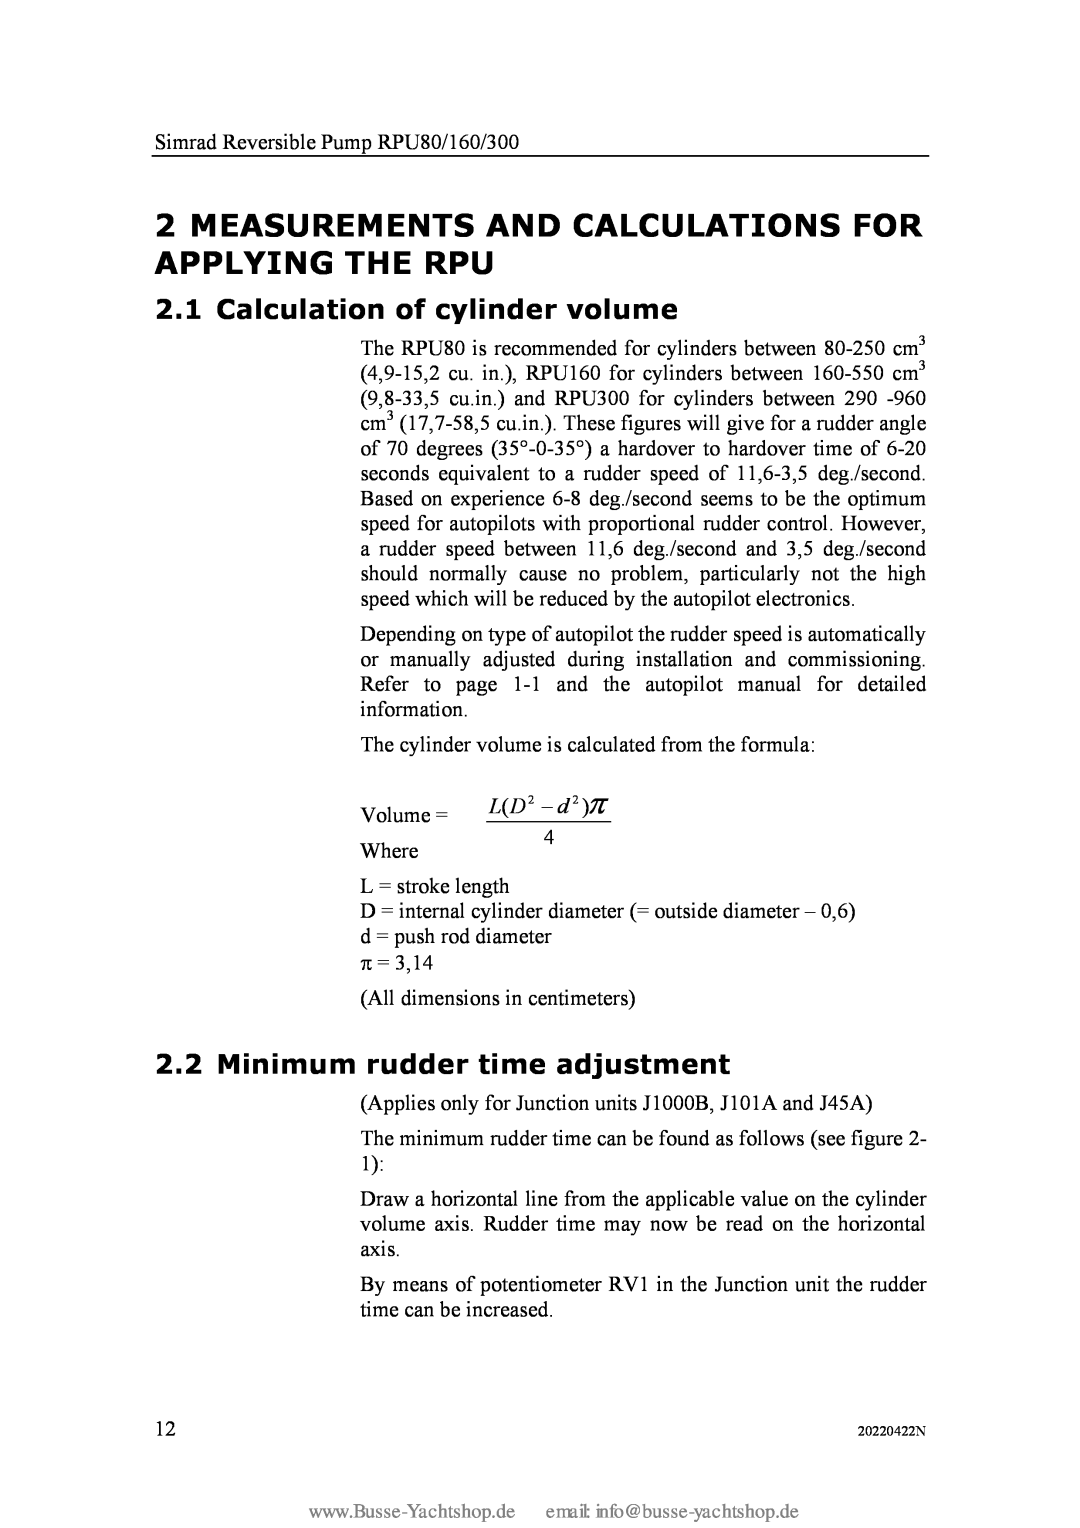 Simran RPU80 instruction manual Calculation of cylinder volume, Minimum rudder time adjustment 